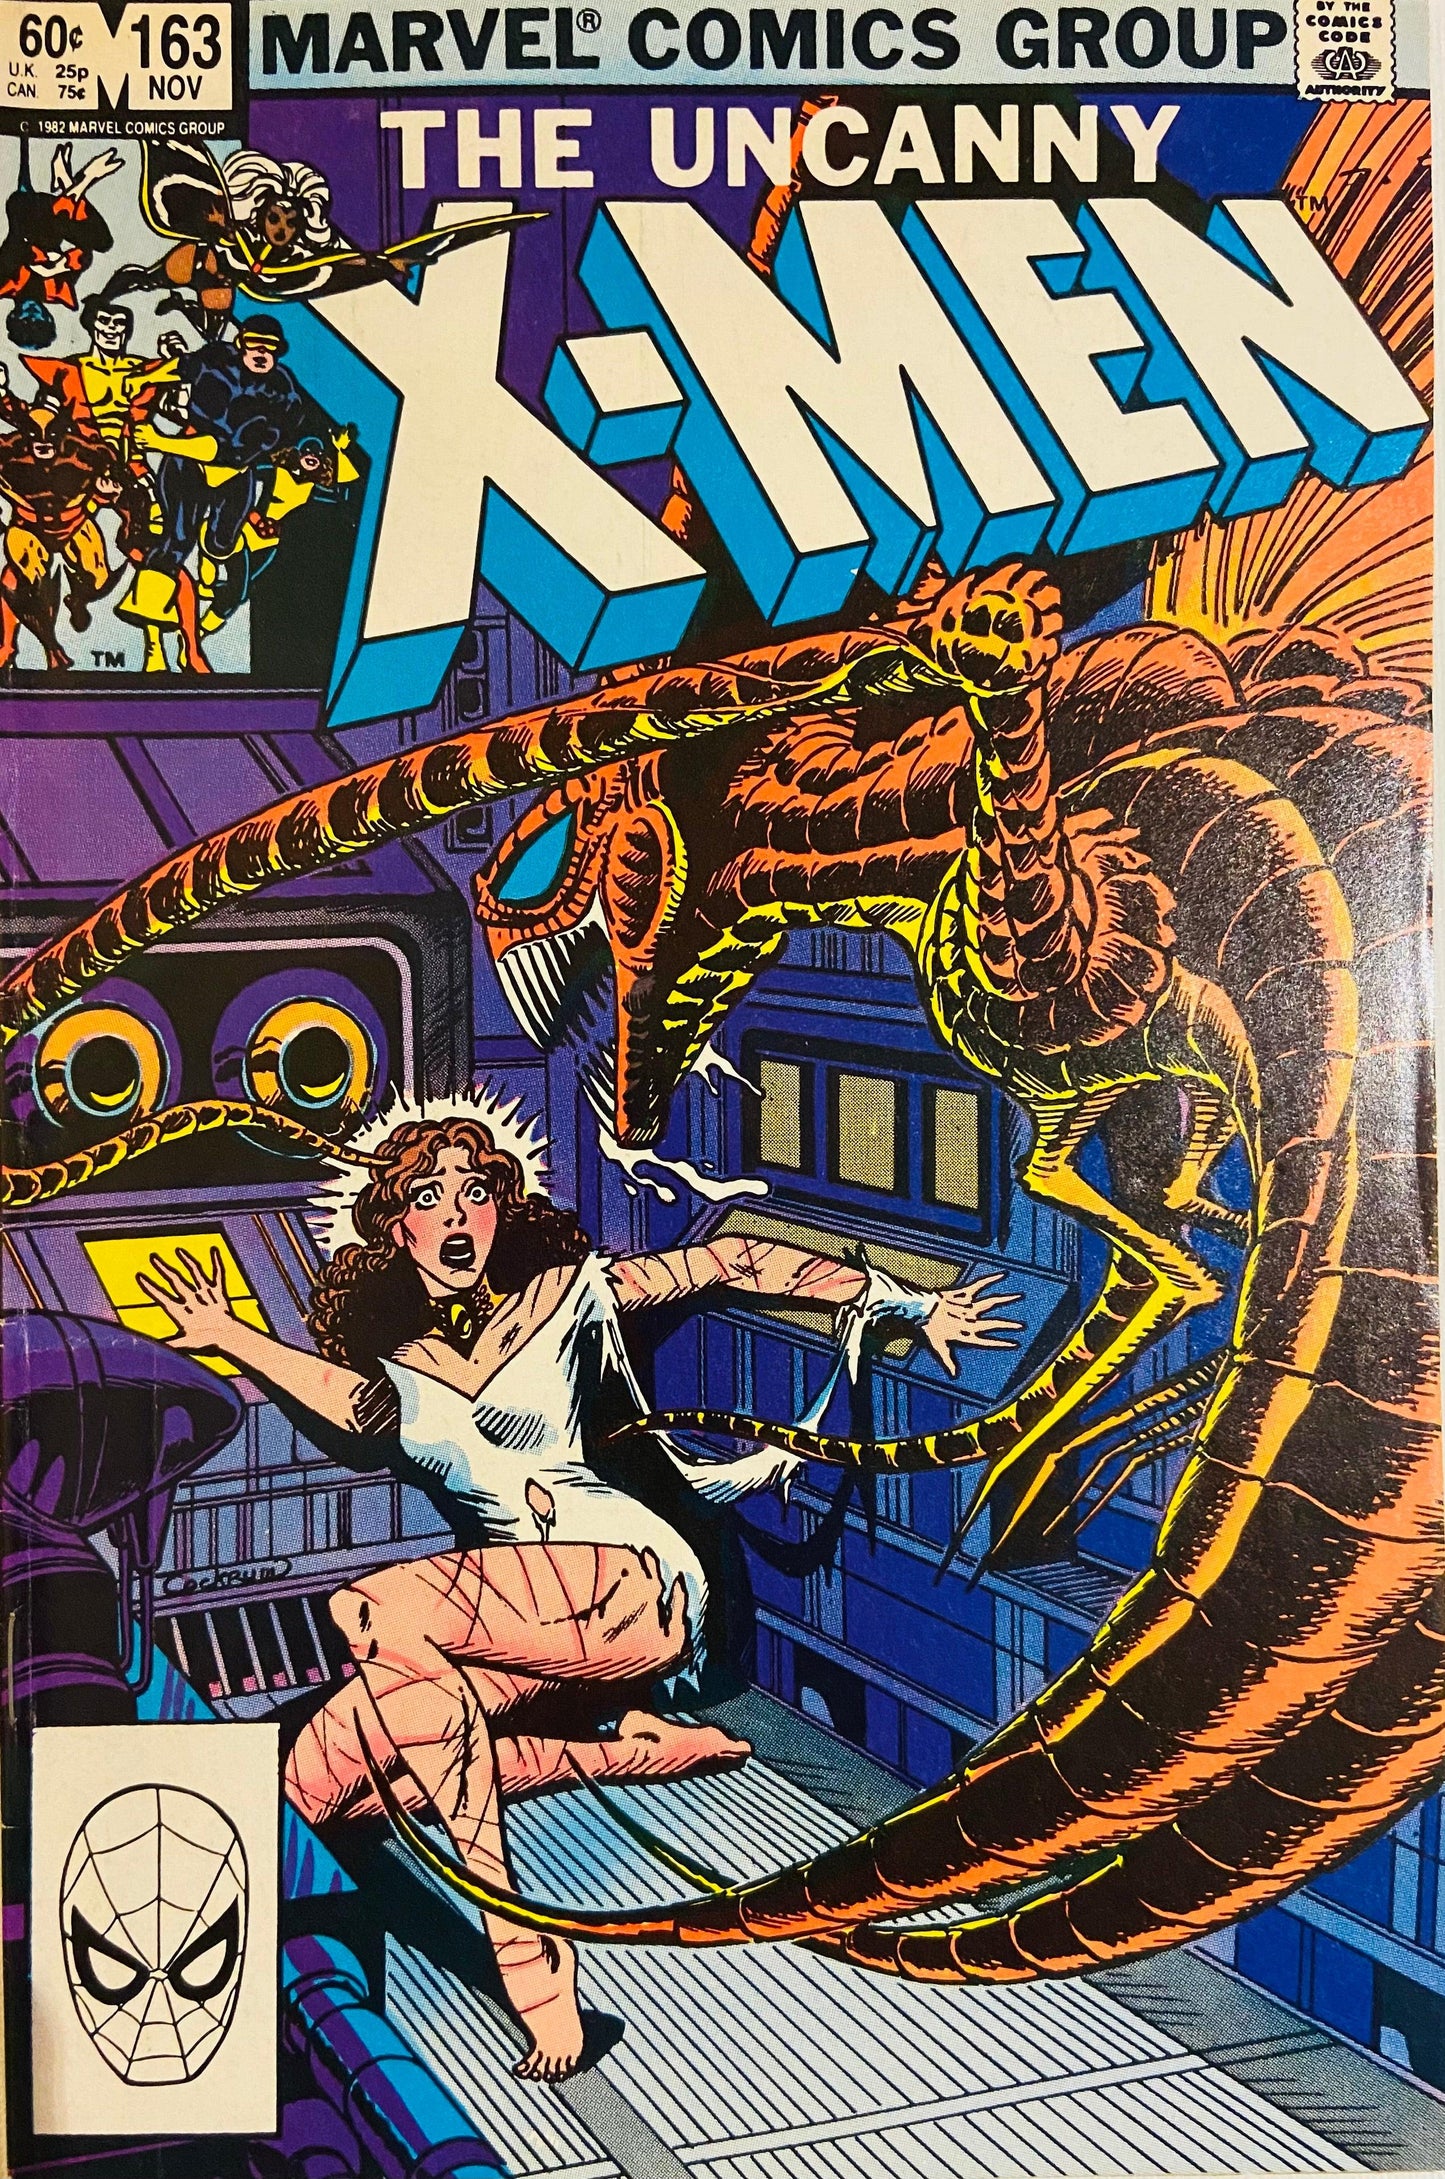 Uncanny X-men #163 - HolyGrail Comix